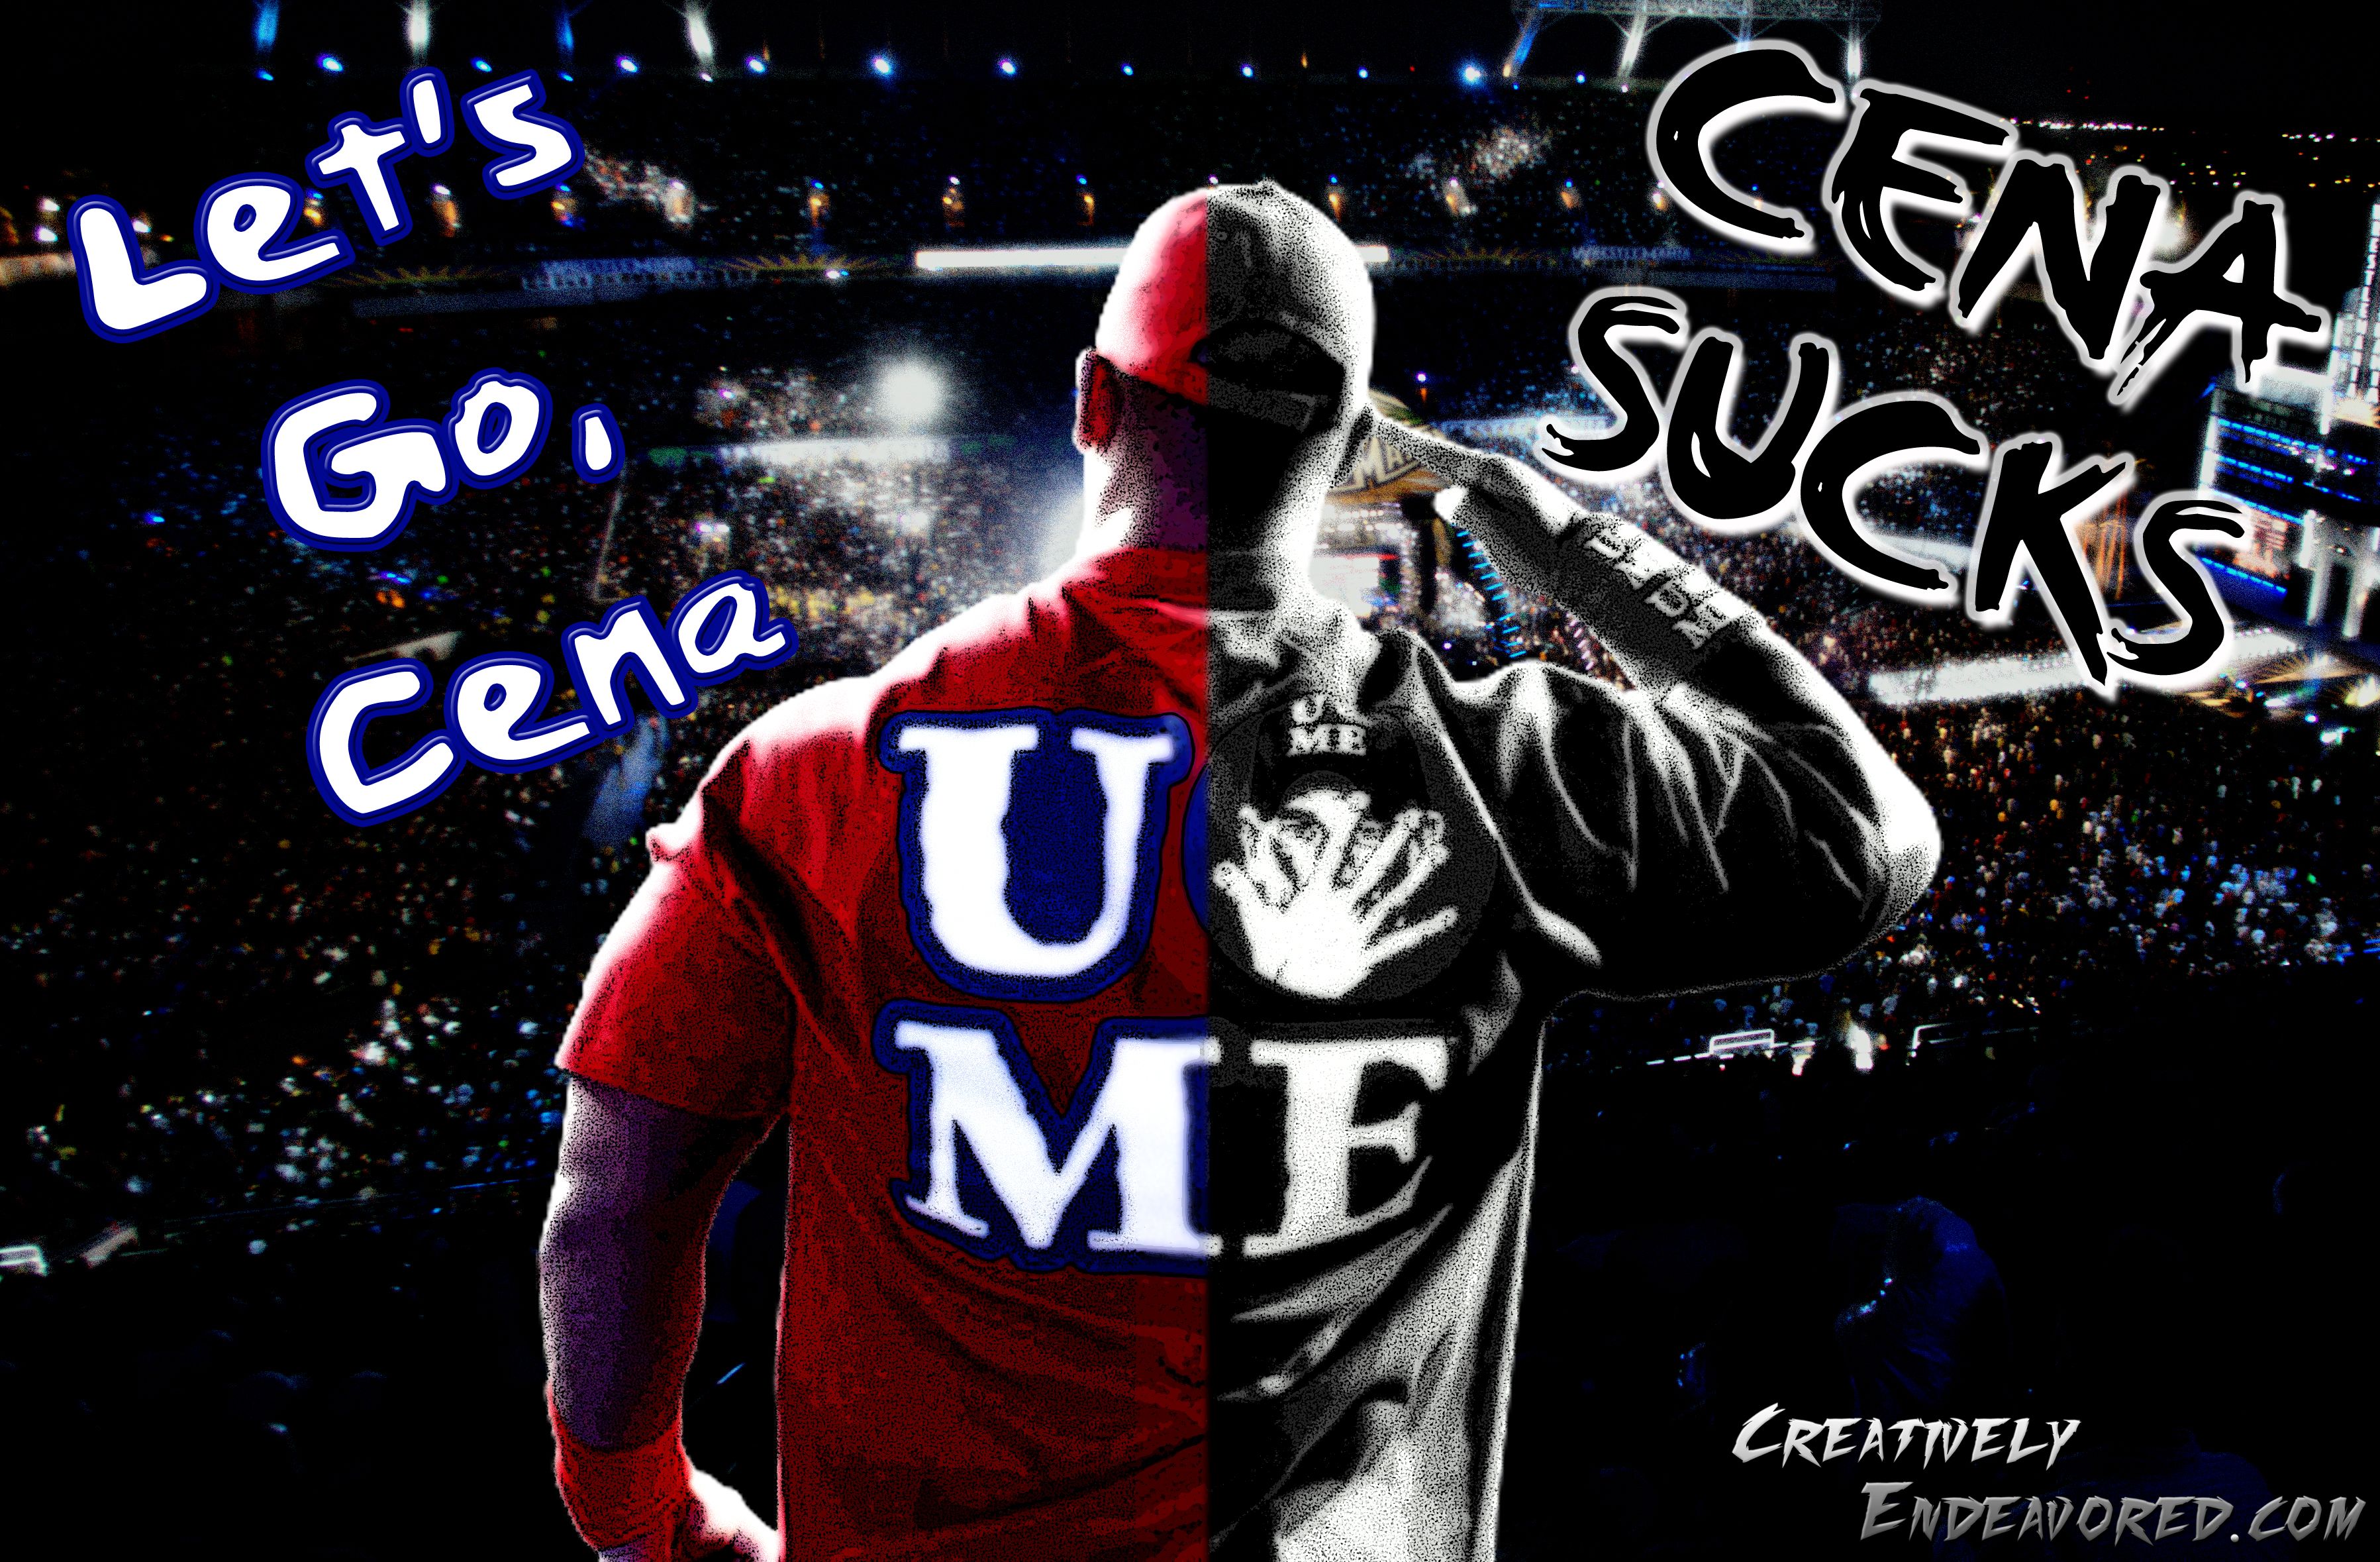 John Cena Logo Wallpaper